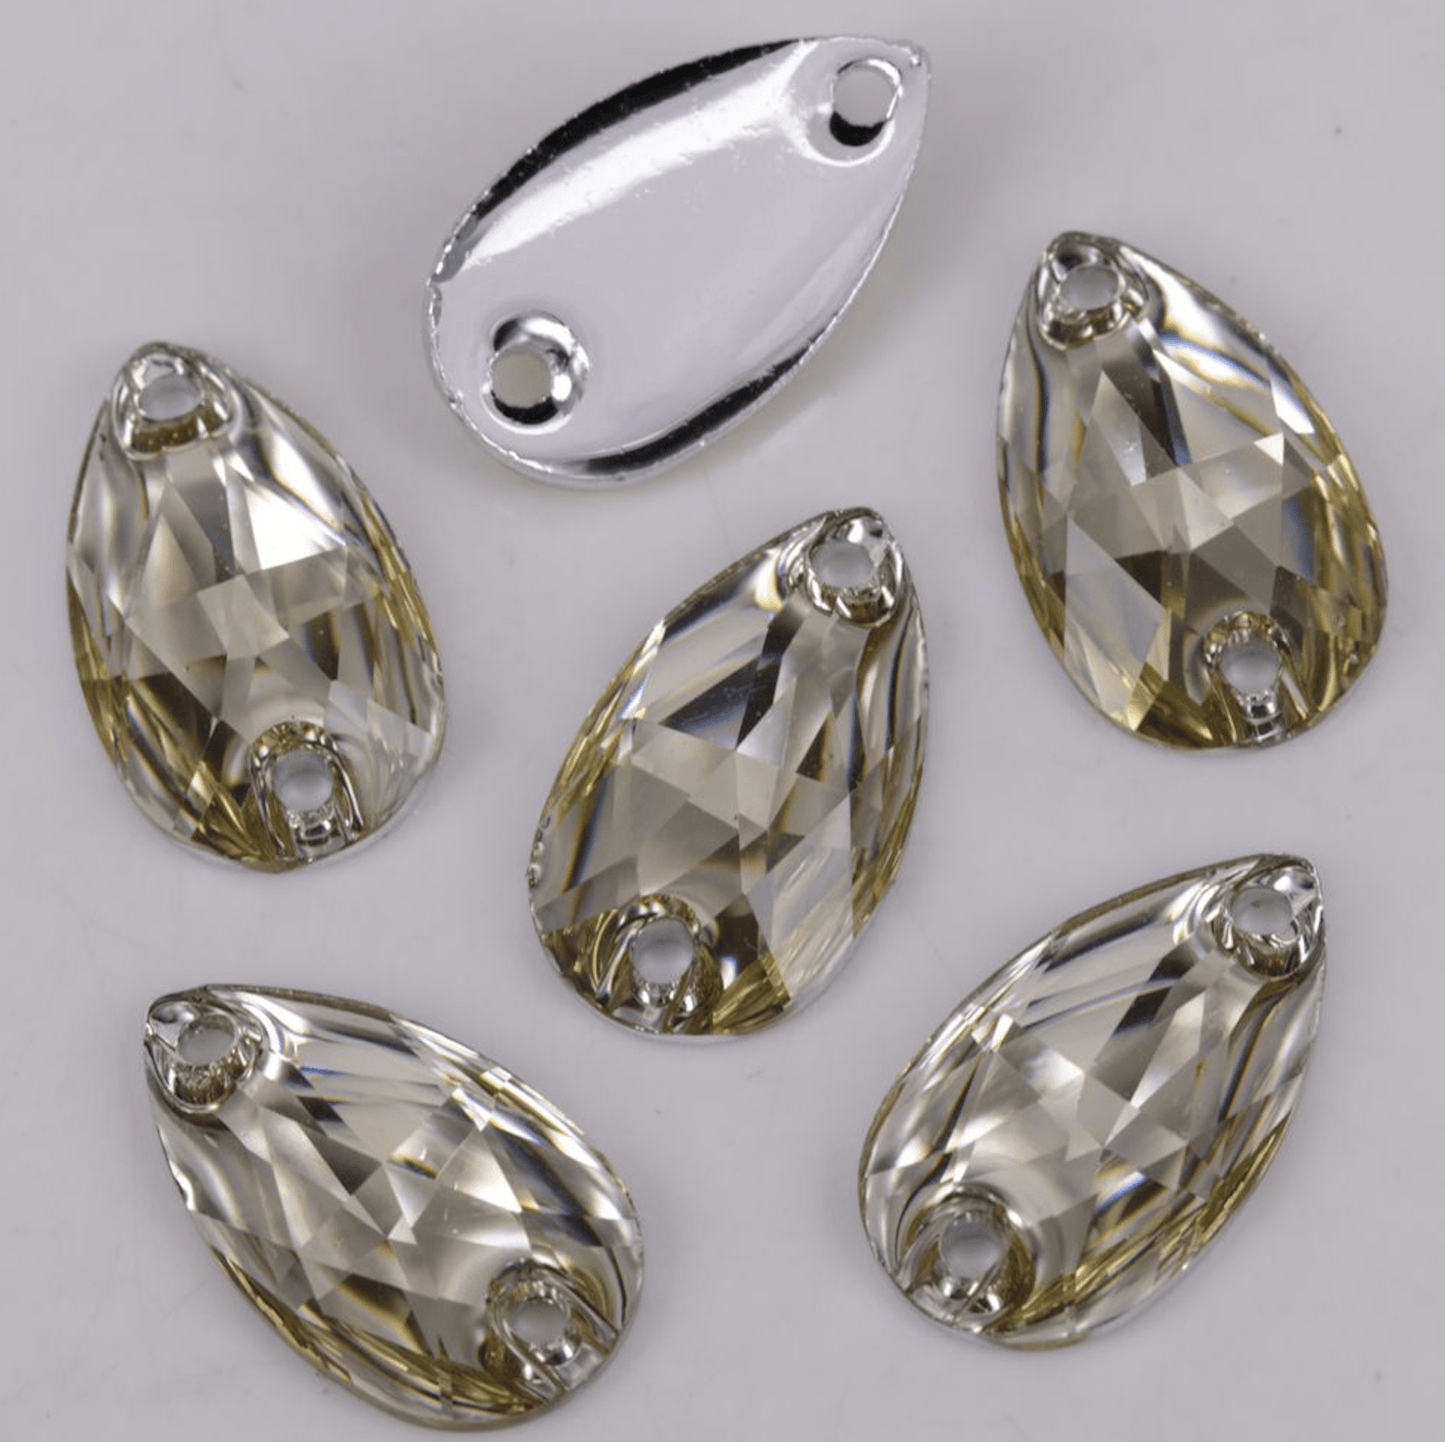 Sundaylace Creations & Bling Resin Gems Gold-Champange 10*18mm Mulit-colour Teardrop, Sew on, Resin Gem